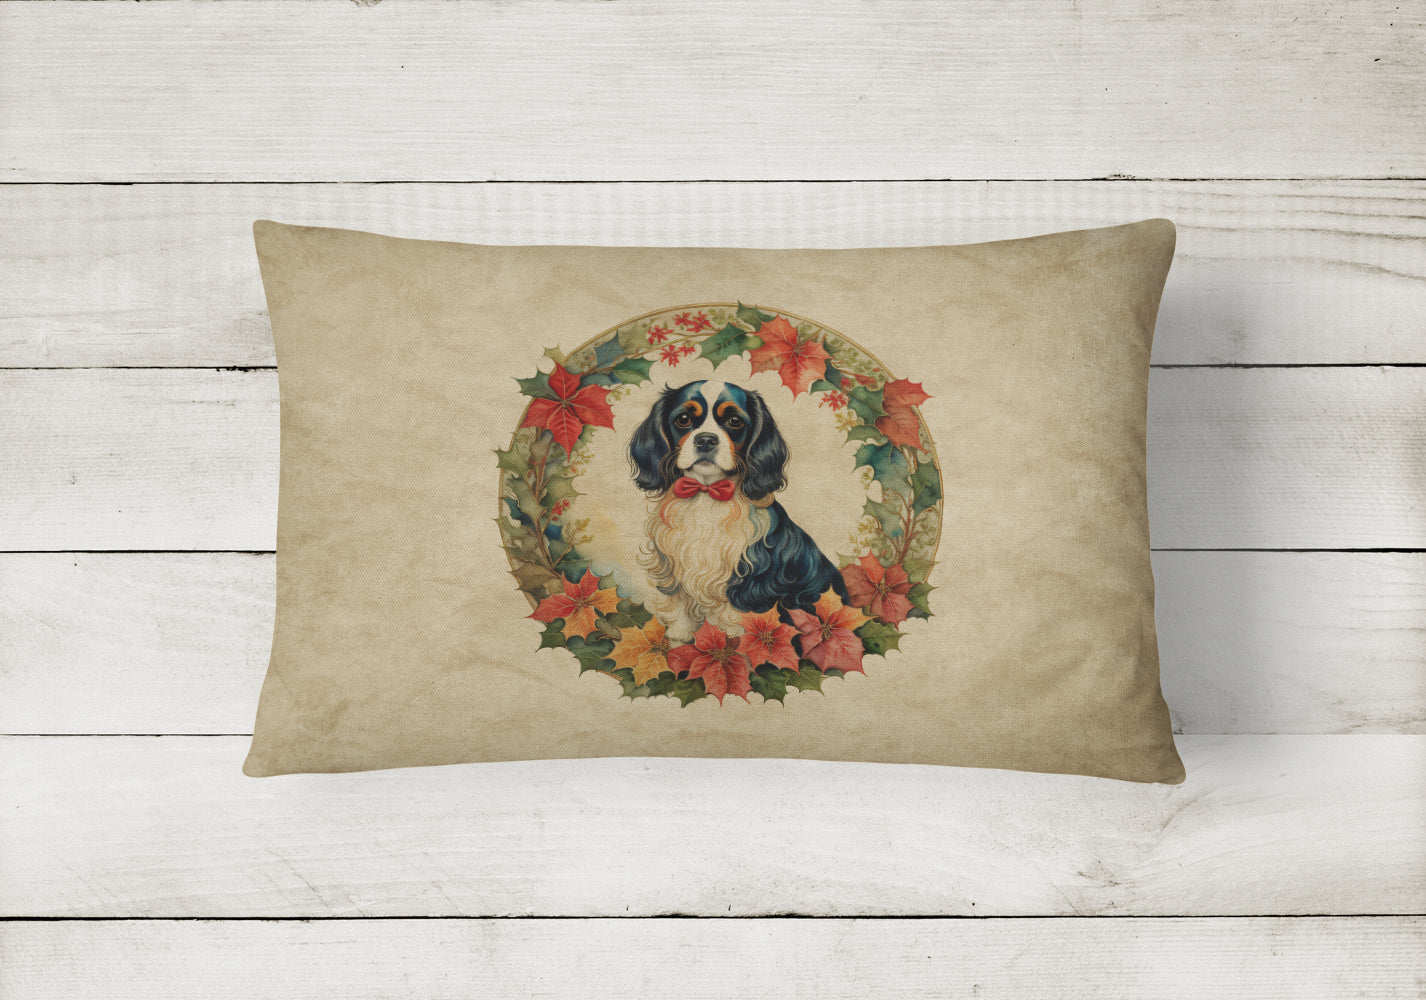 Buy this Cavalier Spaniel Christmas Flowers Throw Pillow